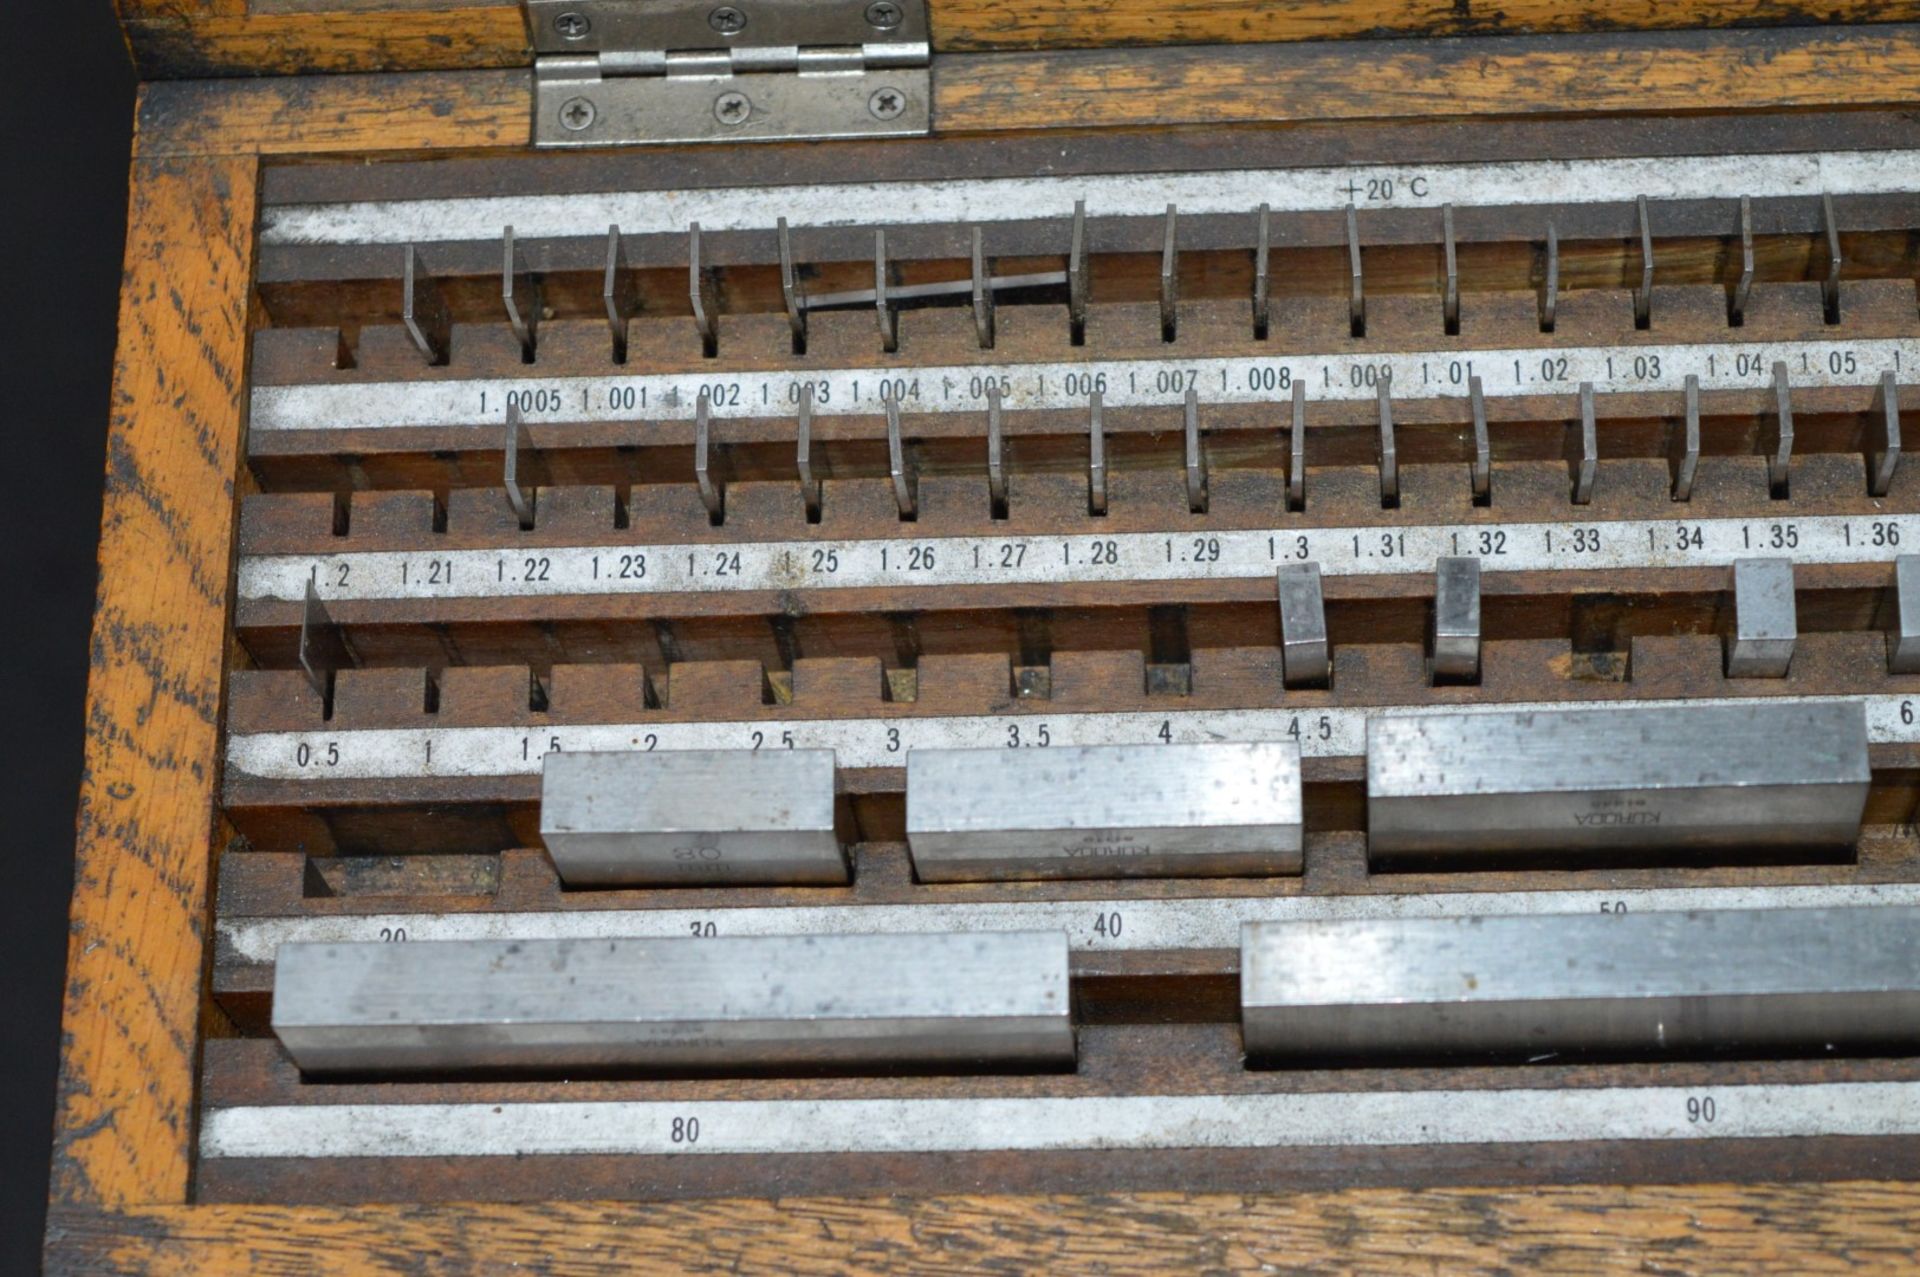 1 x Precise Engineering Gauge Block Set by Kuroda Industries Ltd - Includes 72 Pieces and - Image 2 of 5